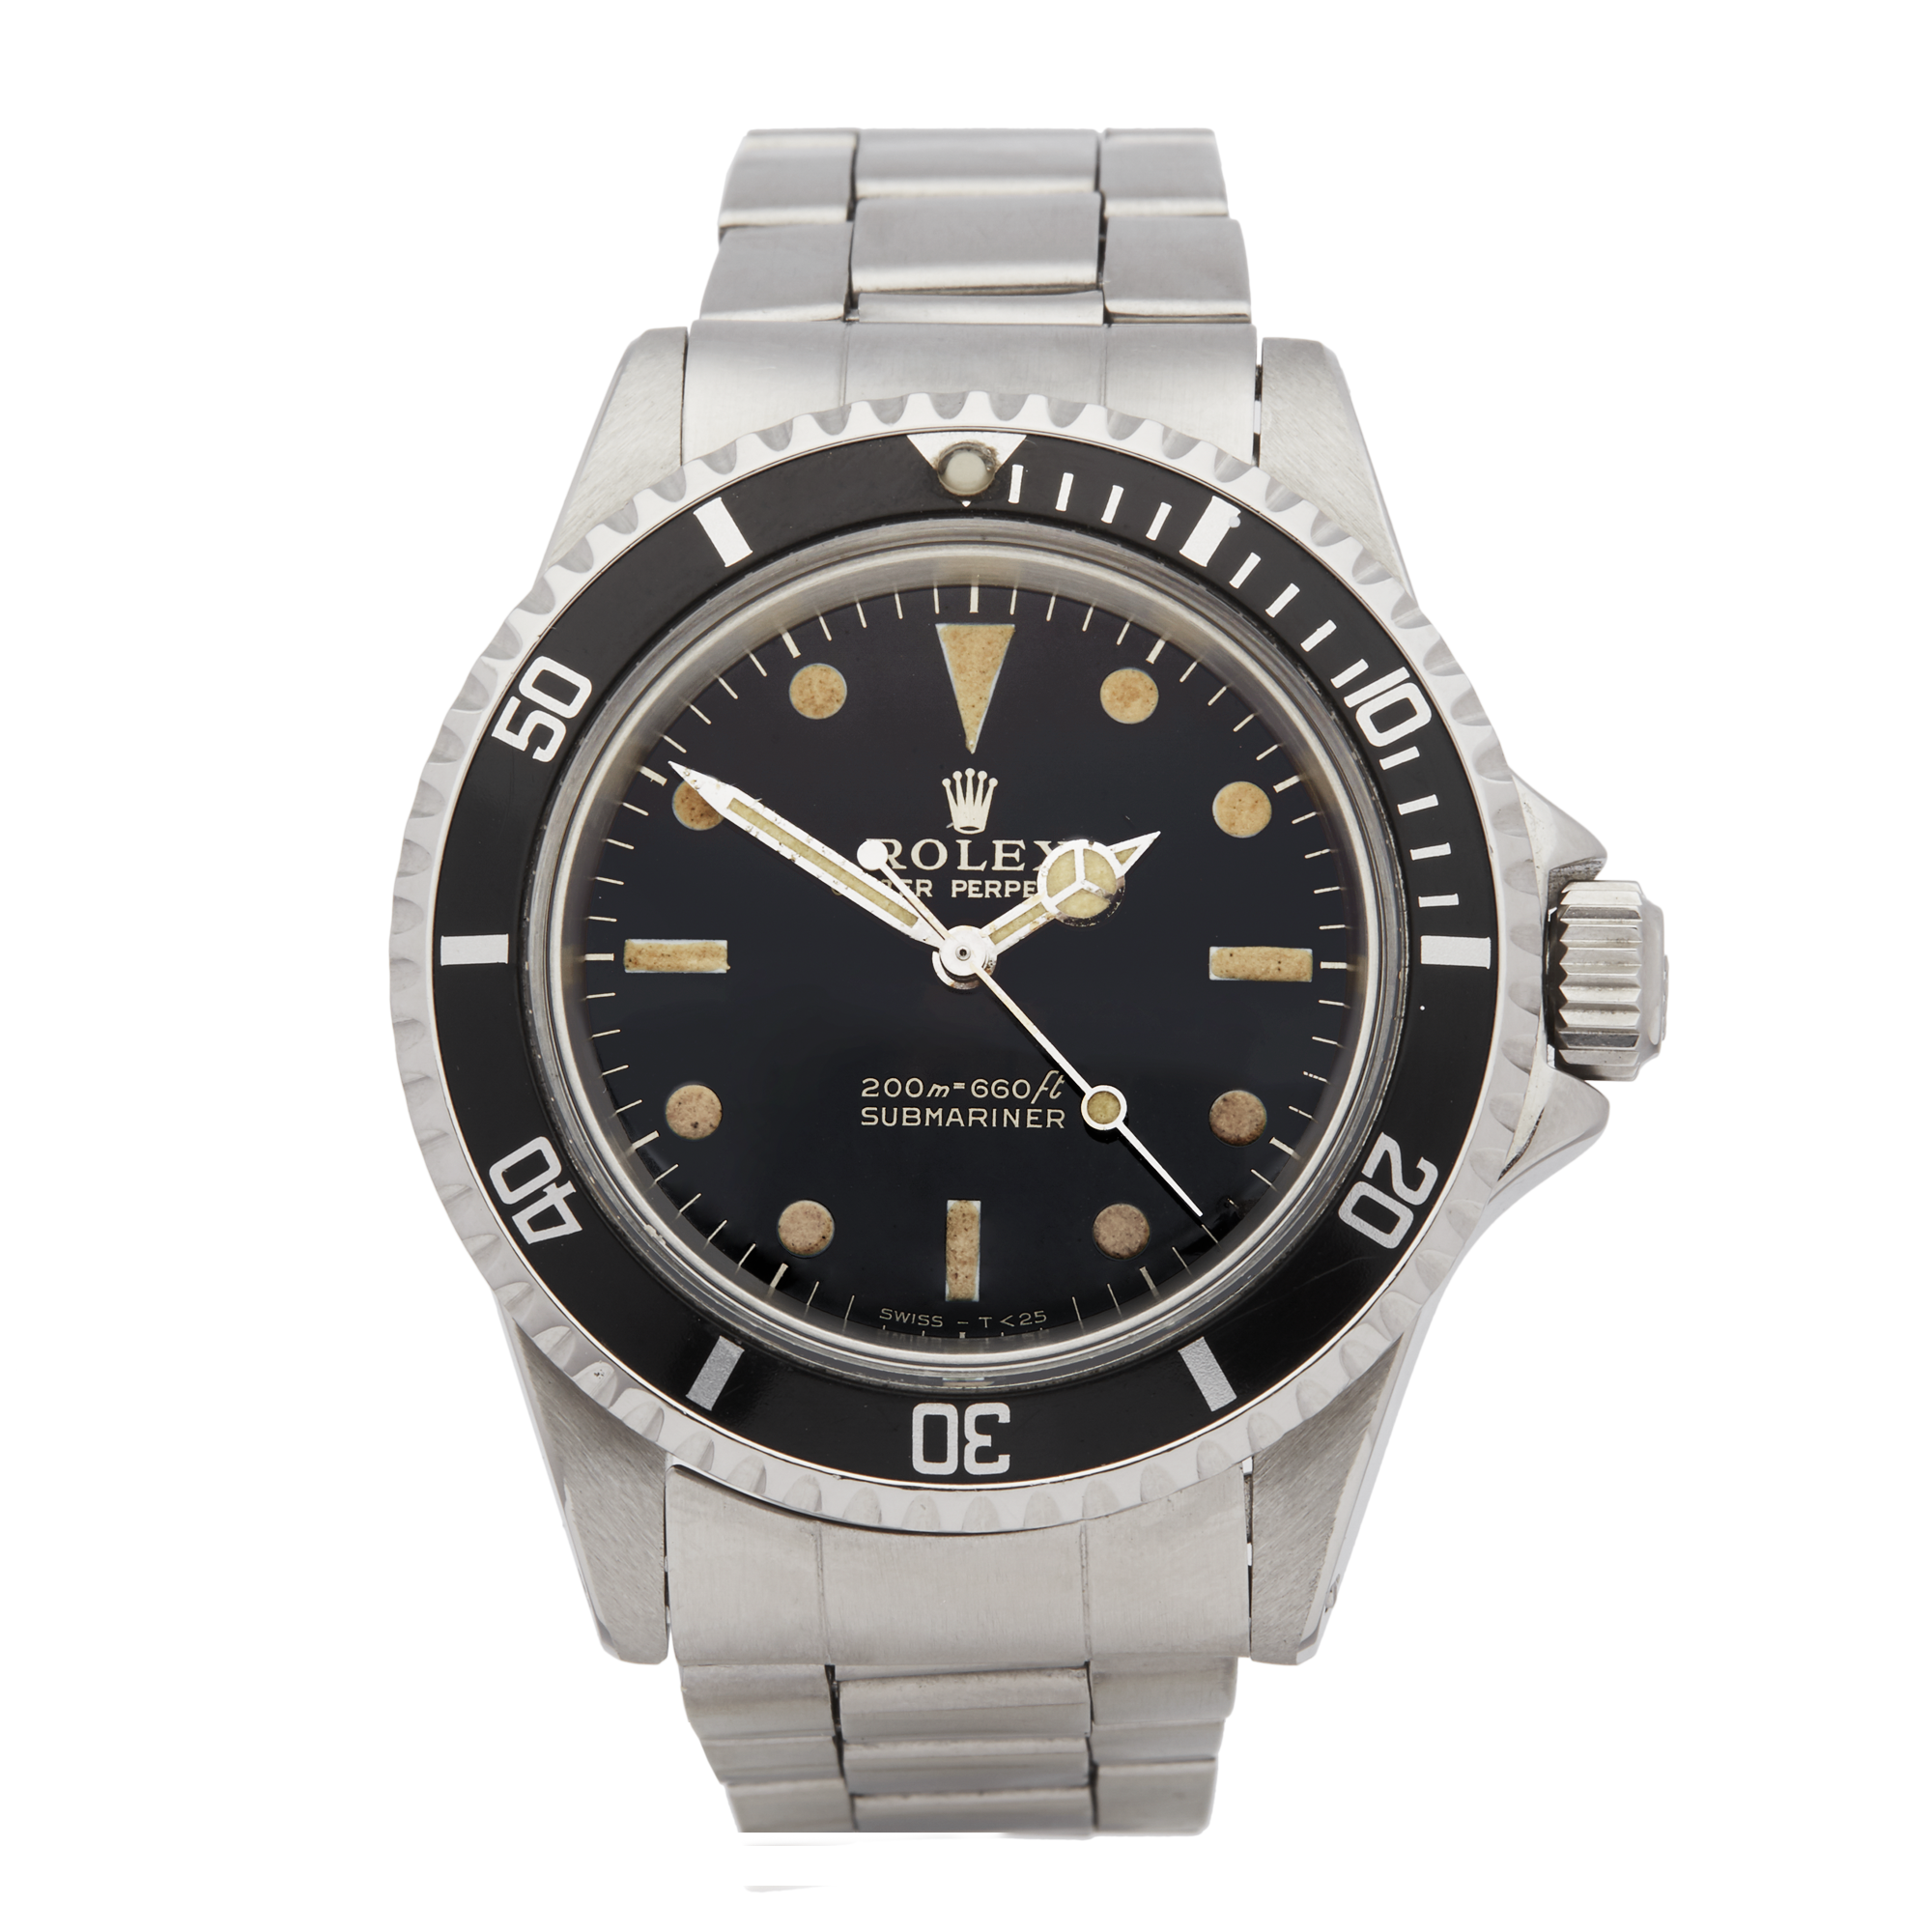 1967 Rolex Submariner Non Date Gilt Gloss Stainless Steel - 5513